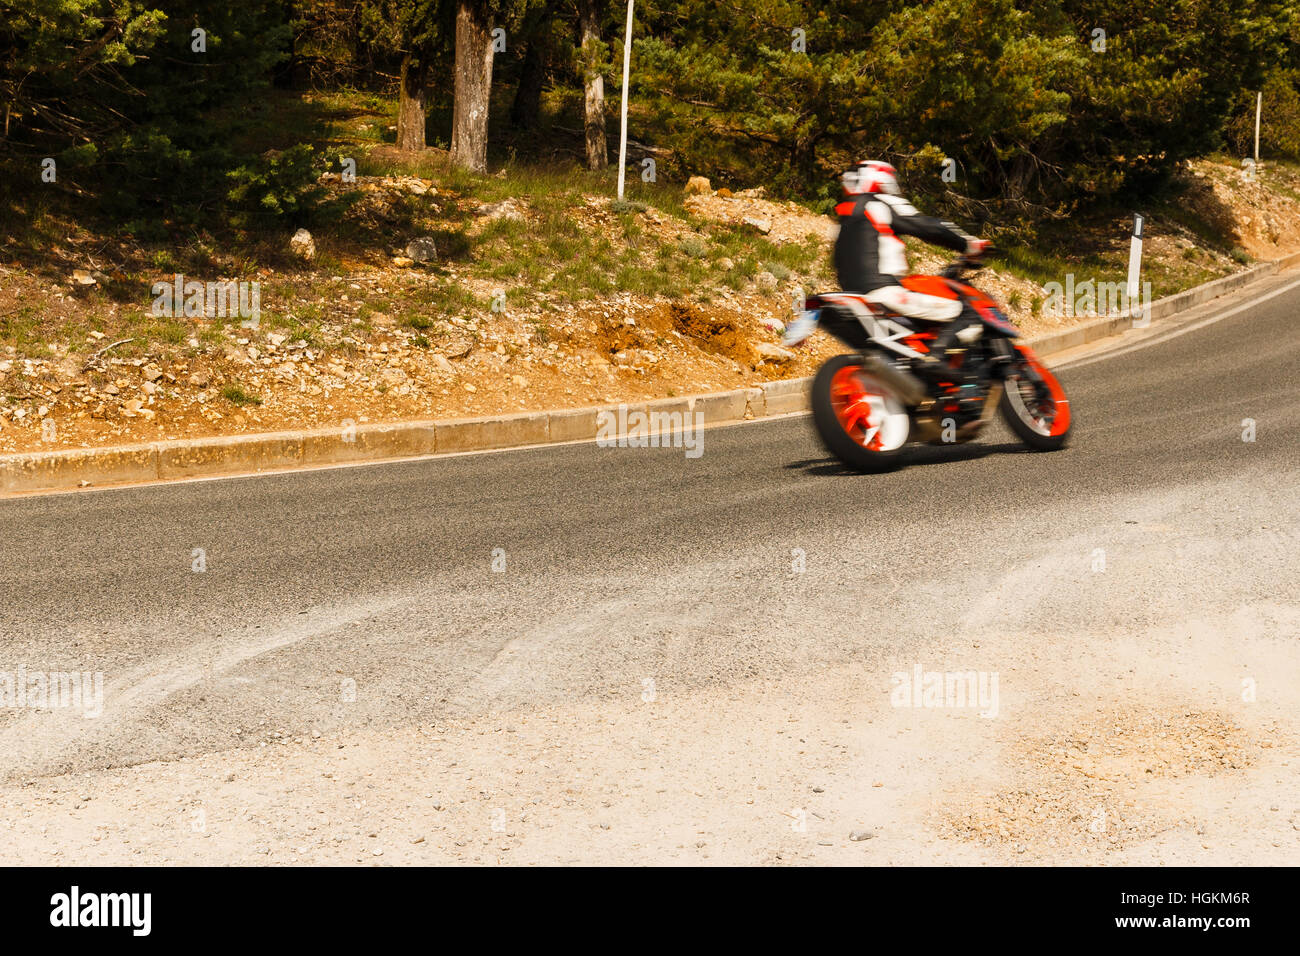 Motor bike racing through the corner of the road, motion unsharpness Stock Photo